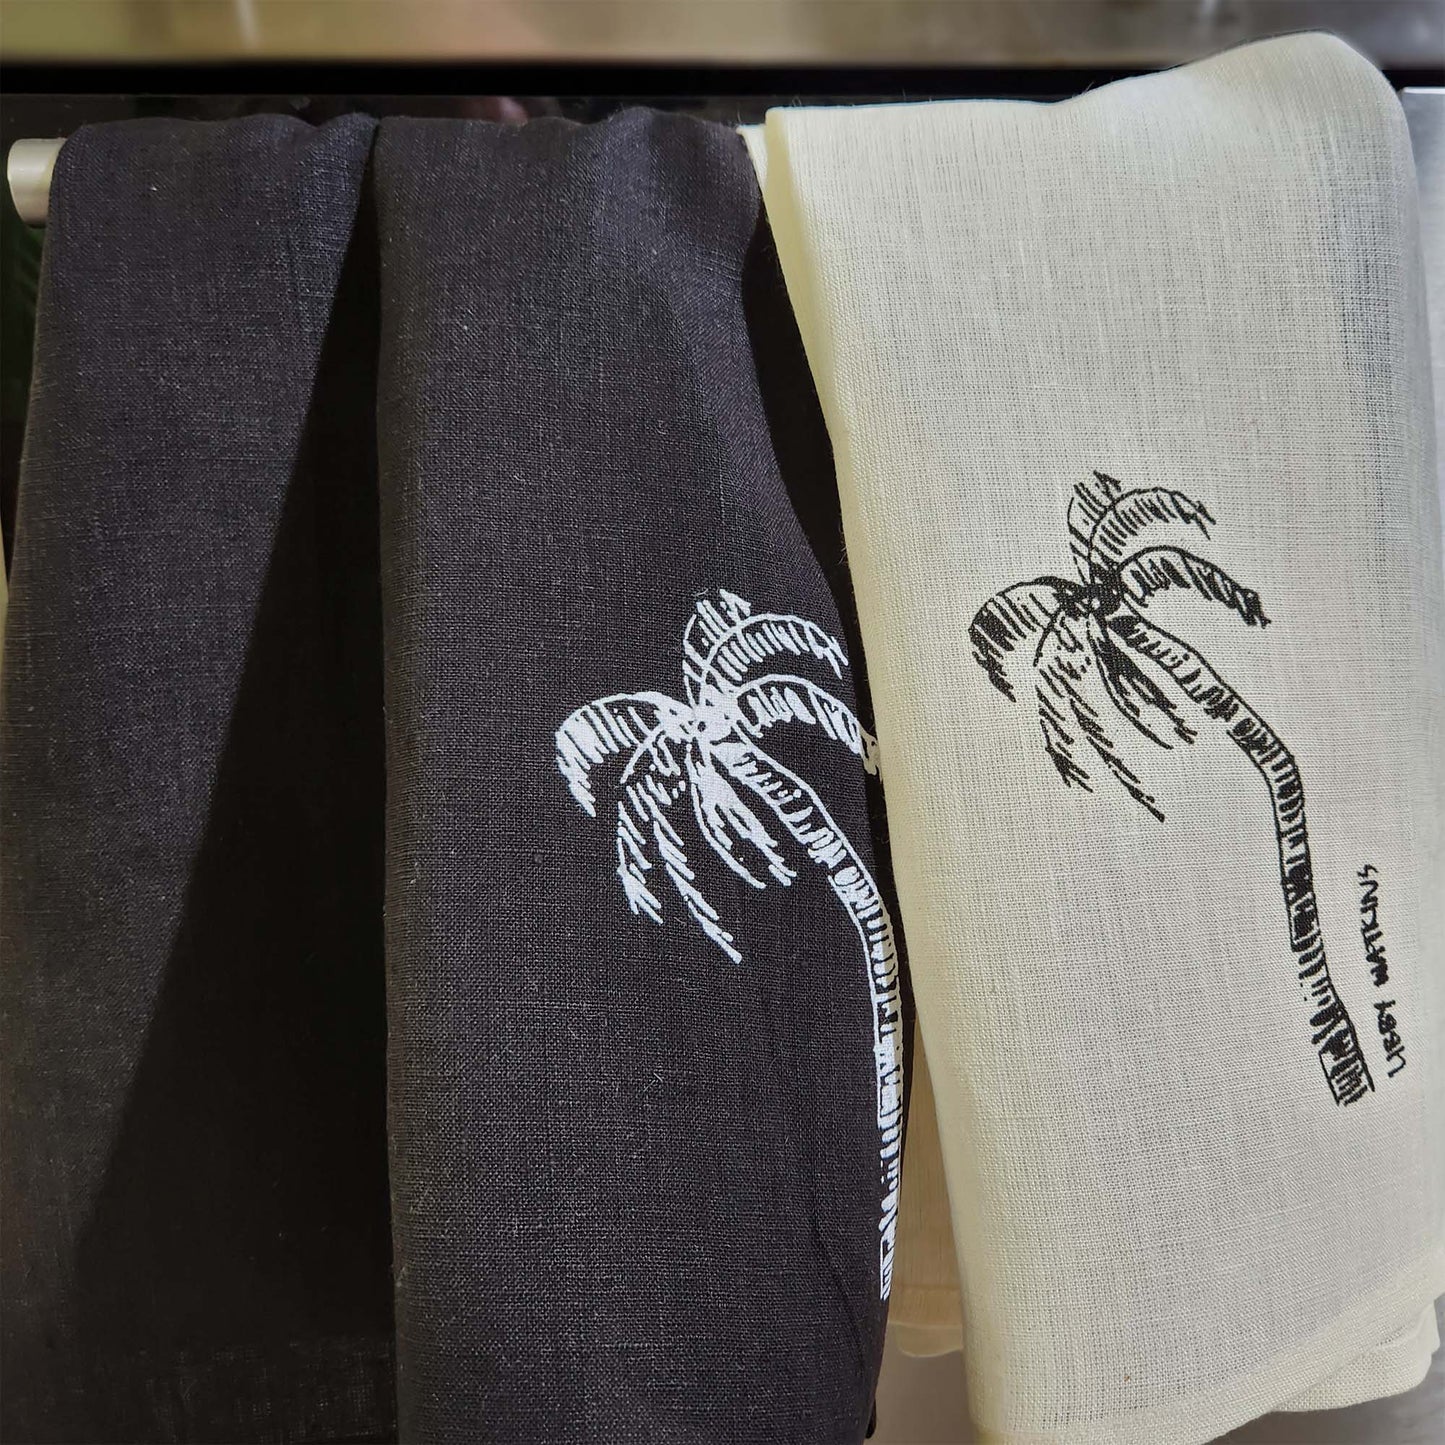 Pair of deluxe palm print linen tea towels